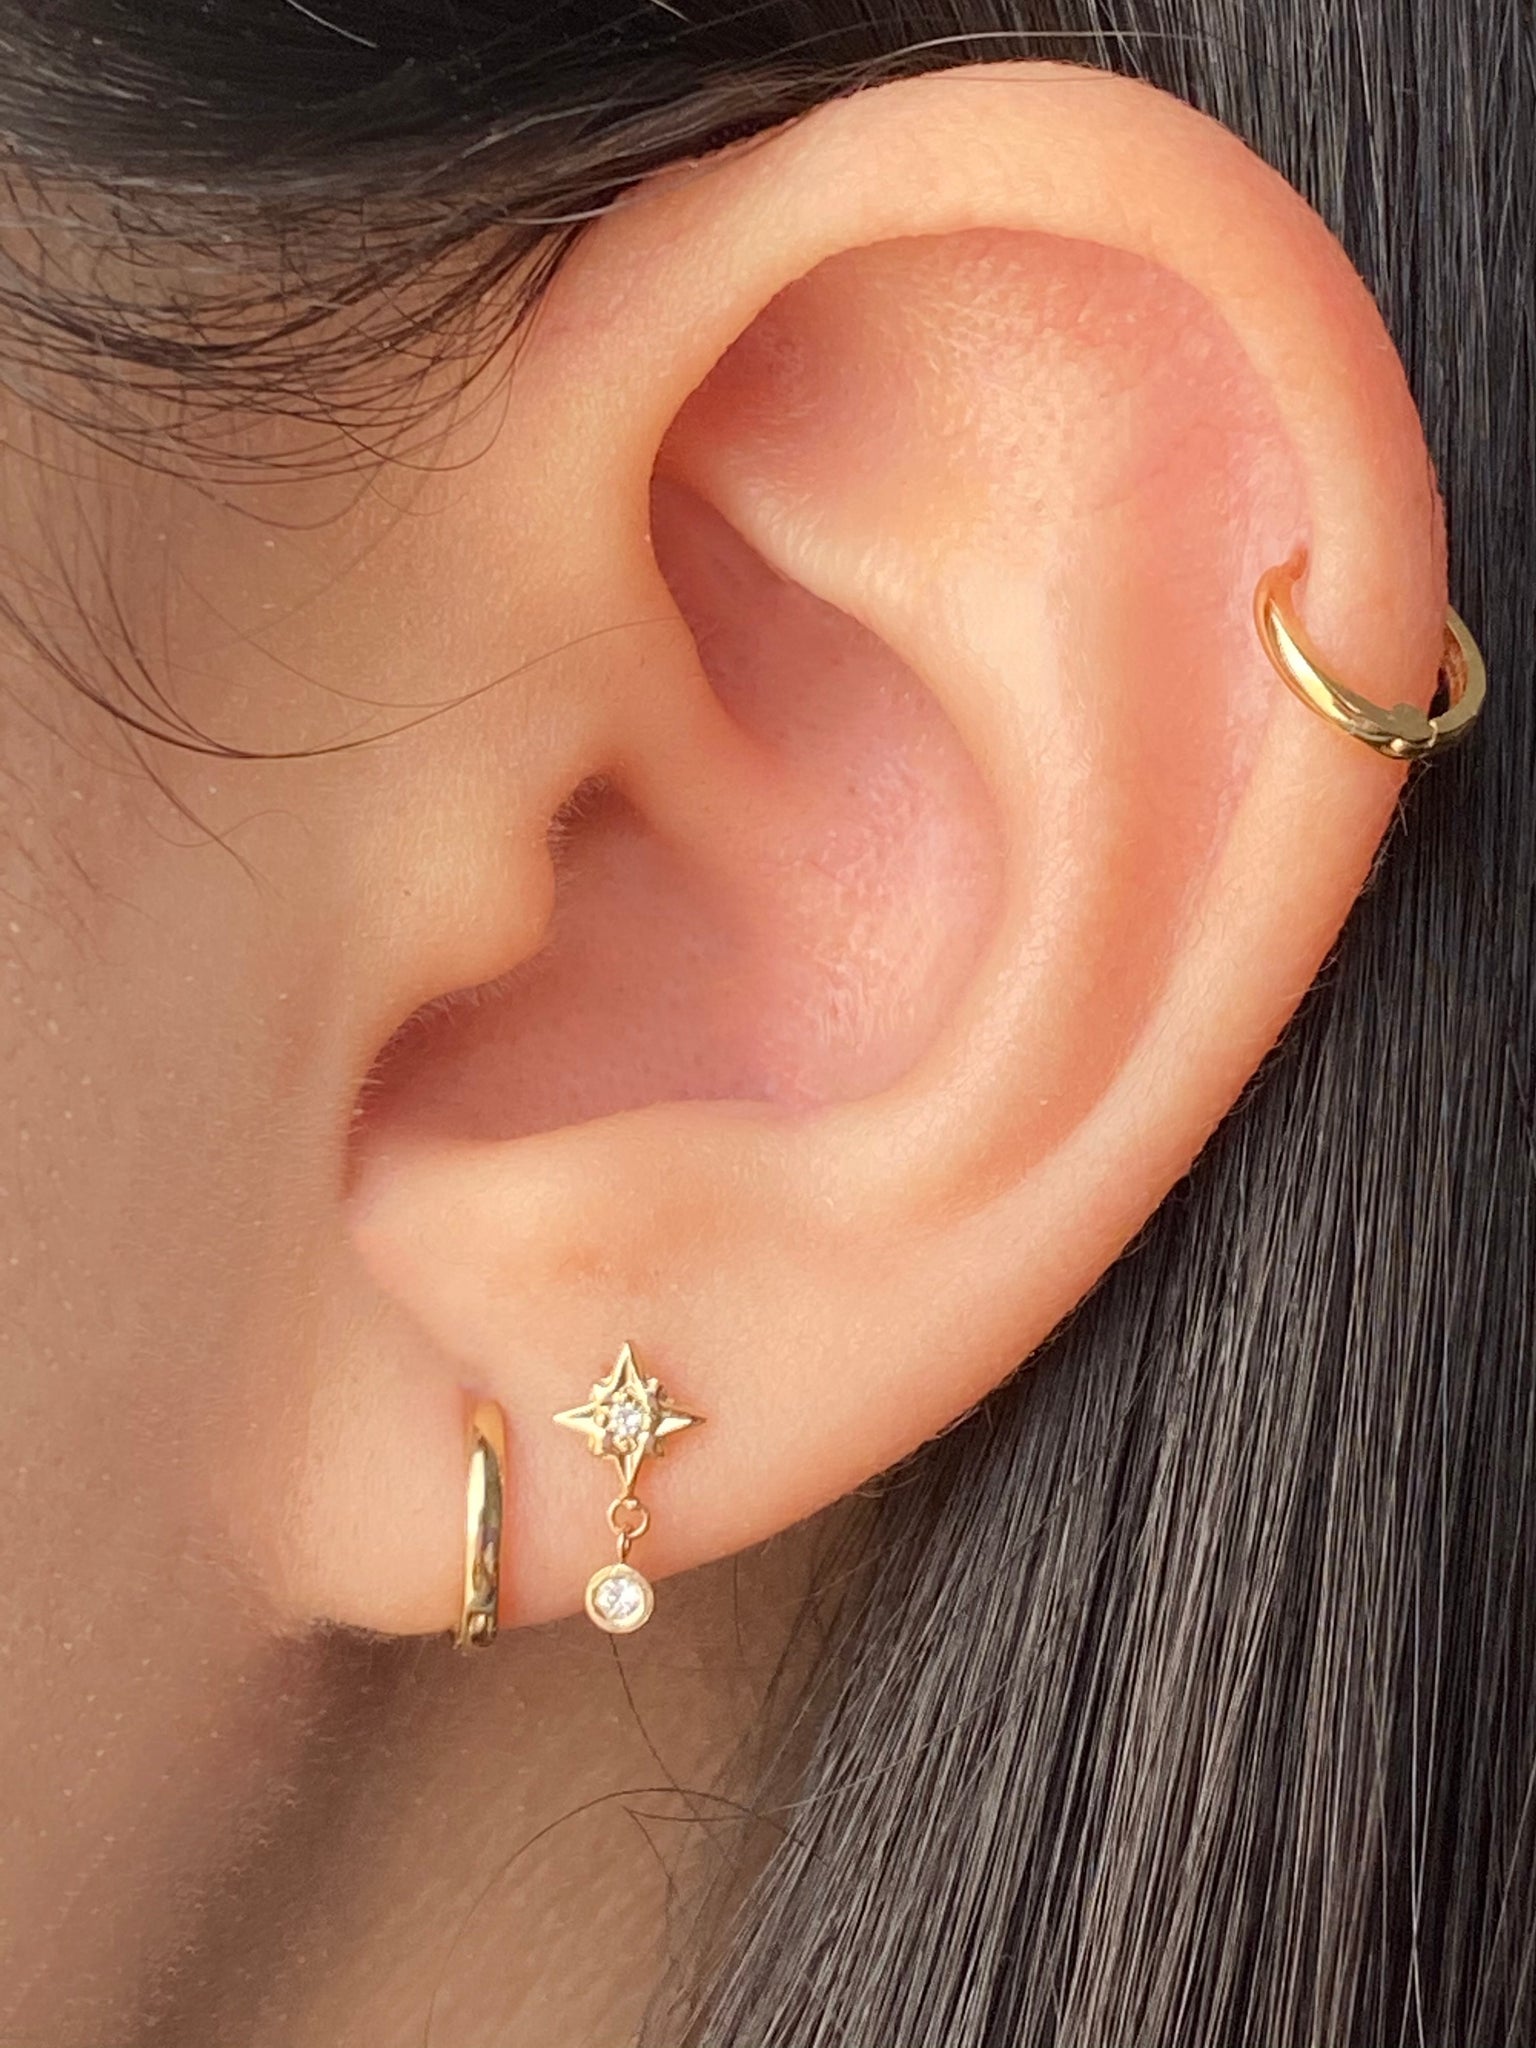 multiple flat piercing ideas that look cool cover | Flat piercing, Earings  piercings, Piercings